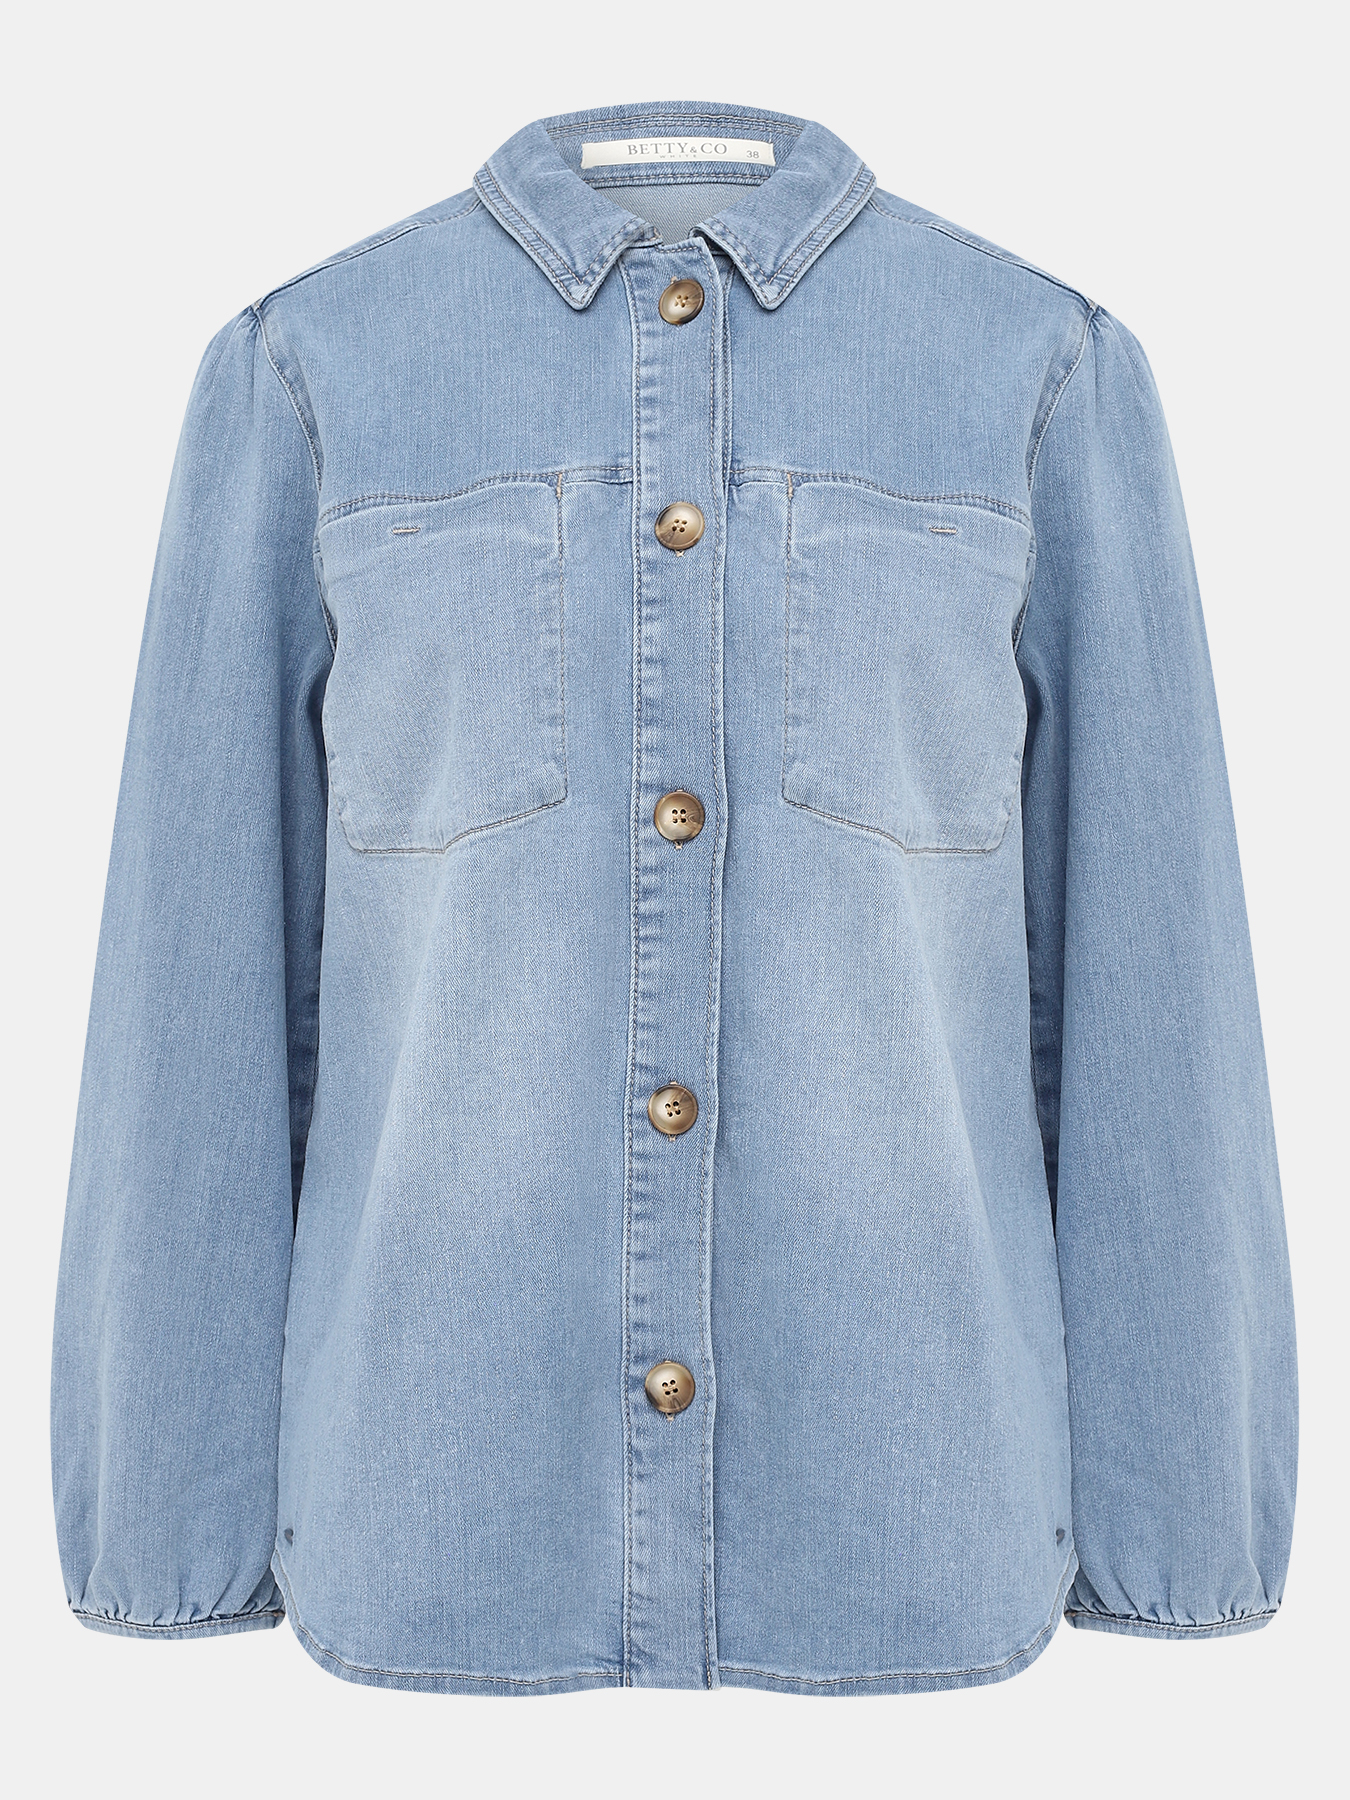 Джинсовая рубашка BETTY&CO 405593-020, цвет синий, размер 44